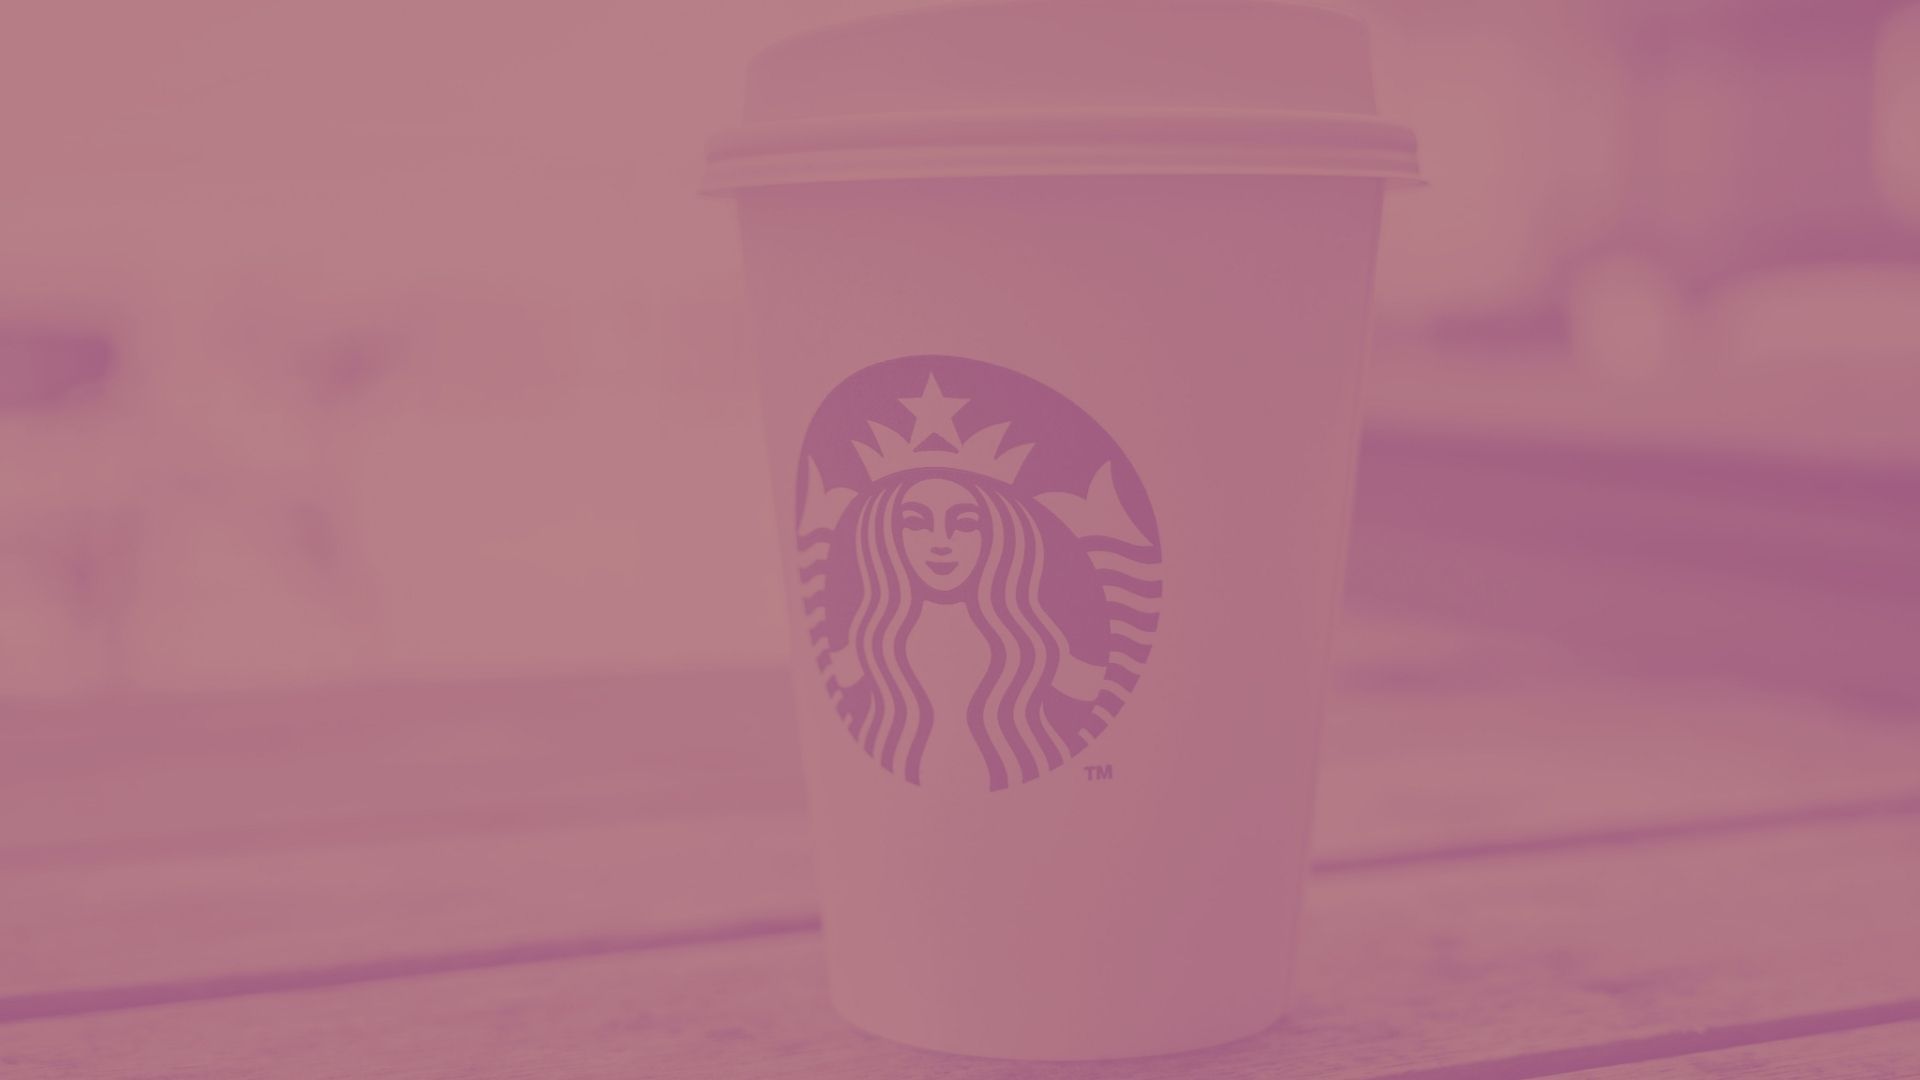 Publicity Marketing: Starbuck's Pumpkin Spice Latte